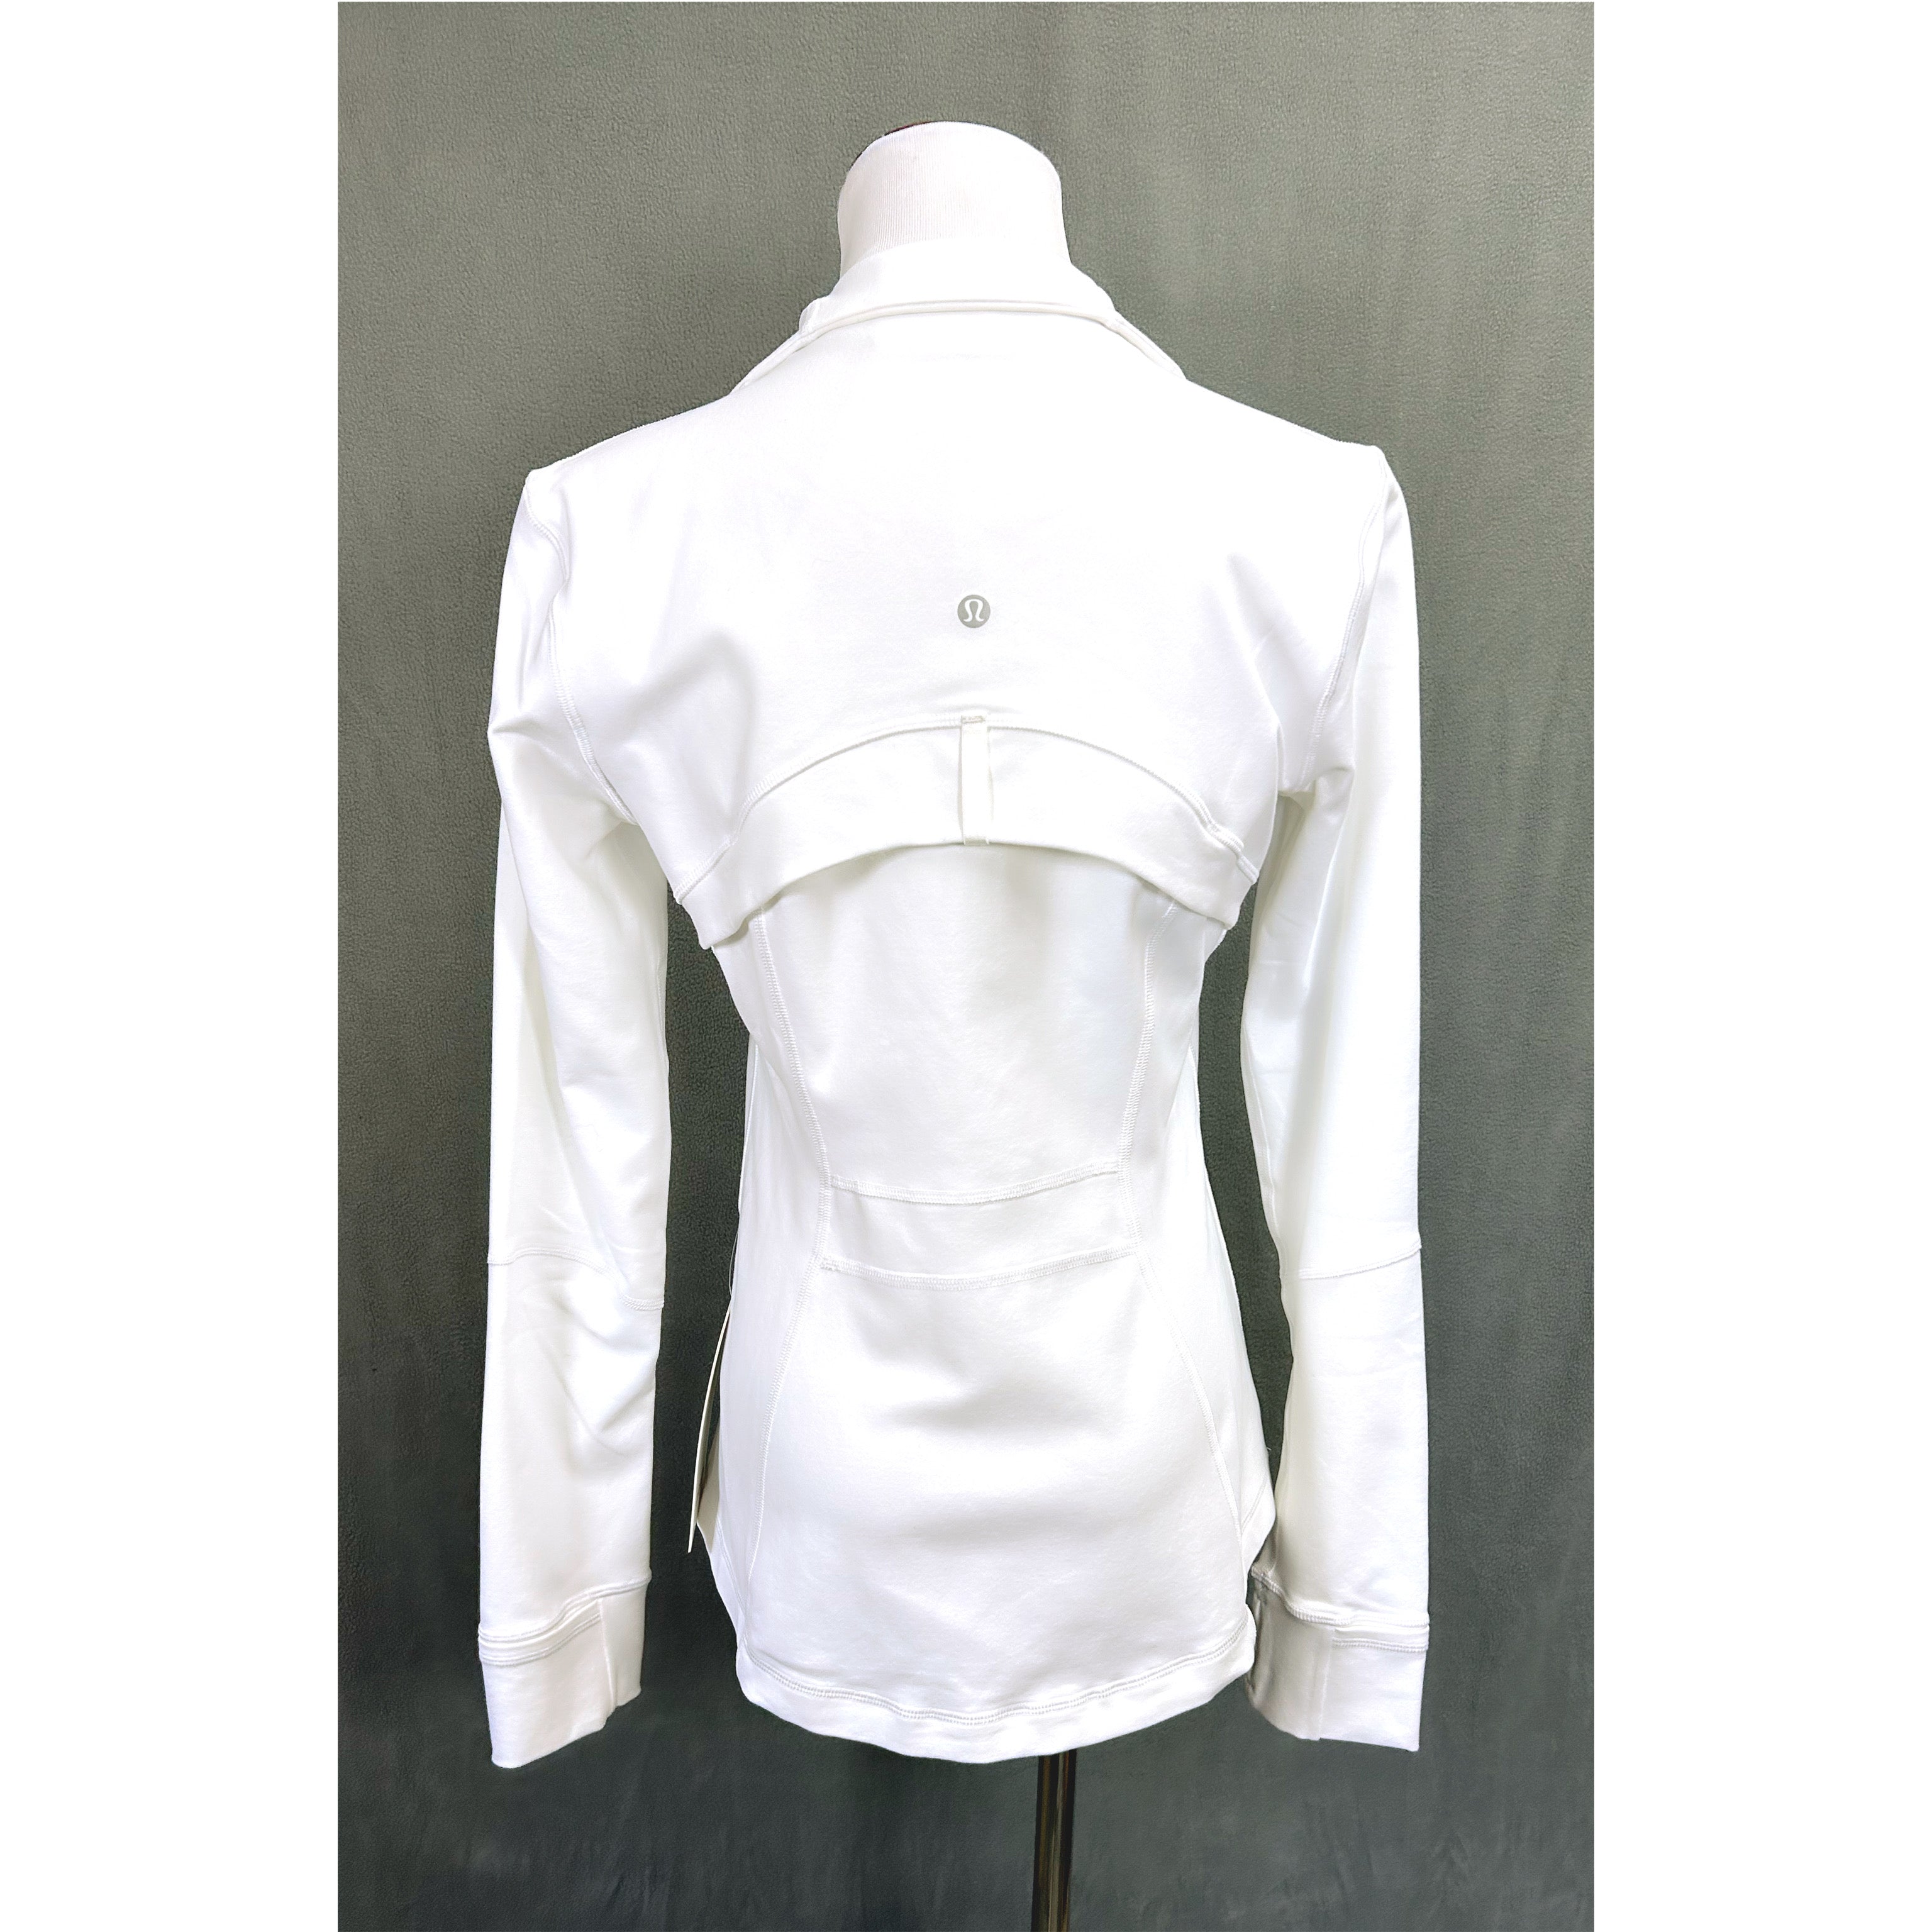 lululemon white Define jacket, size 8, NEW WITH TAGS!